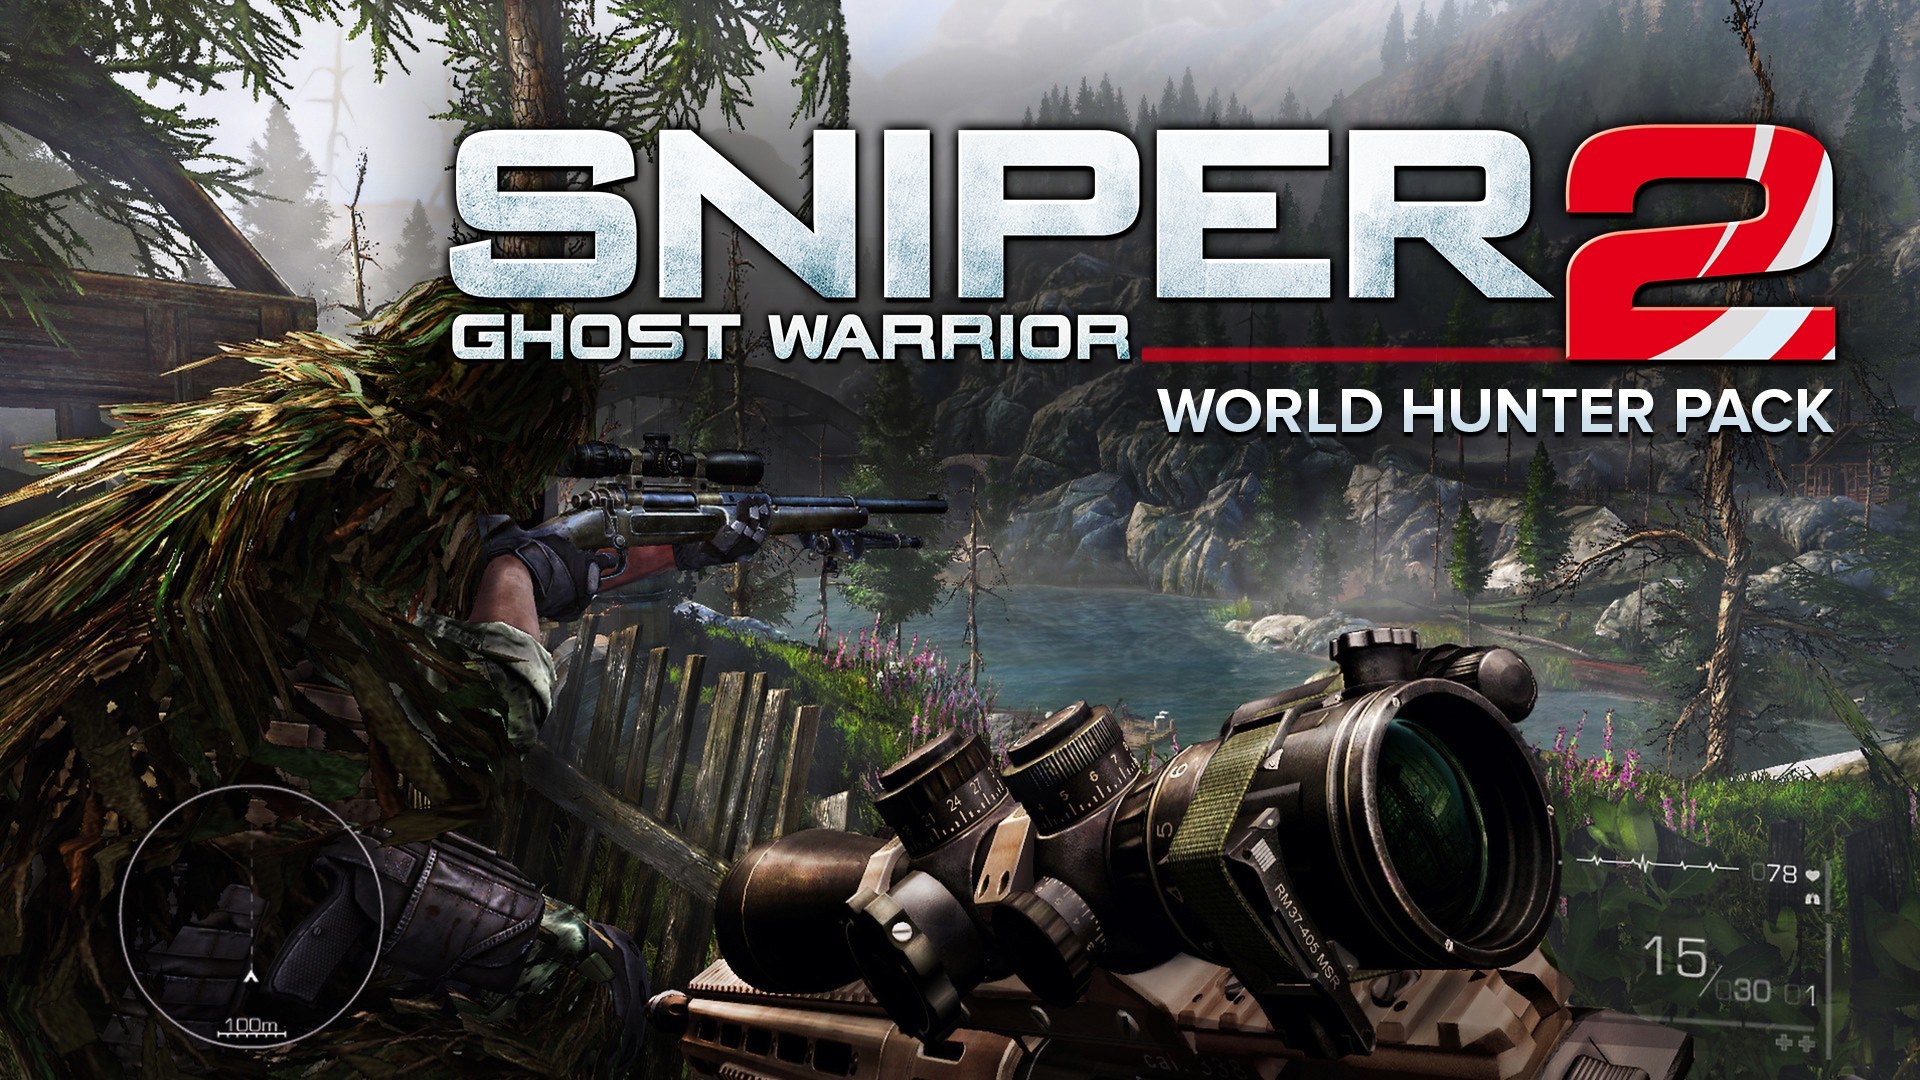 sniper ghost warrior 2 siberian strike